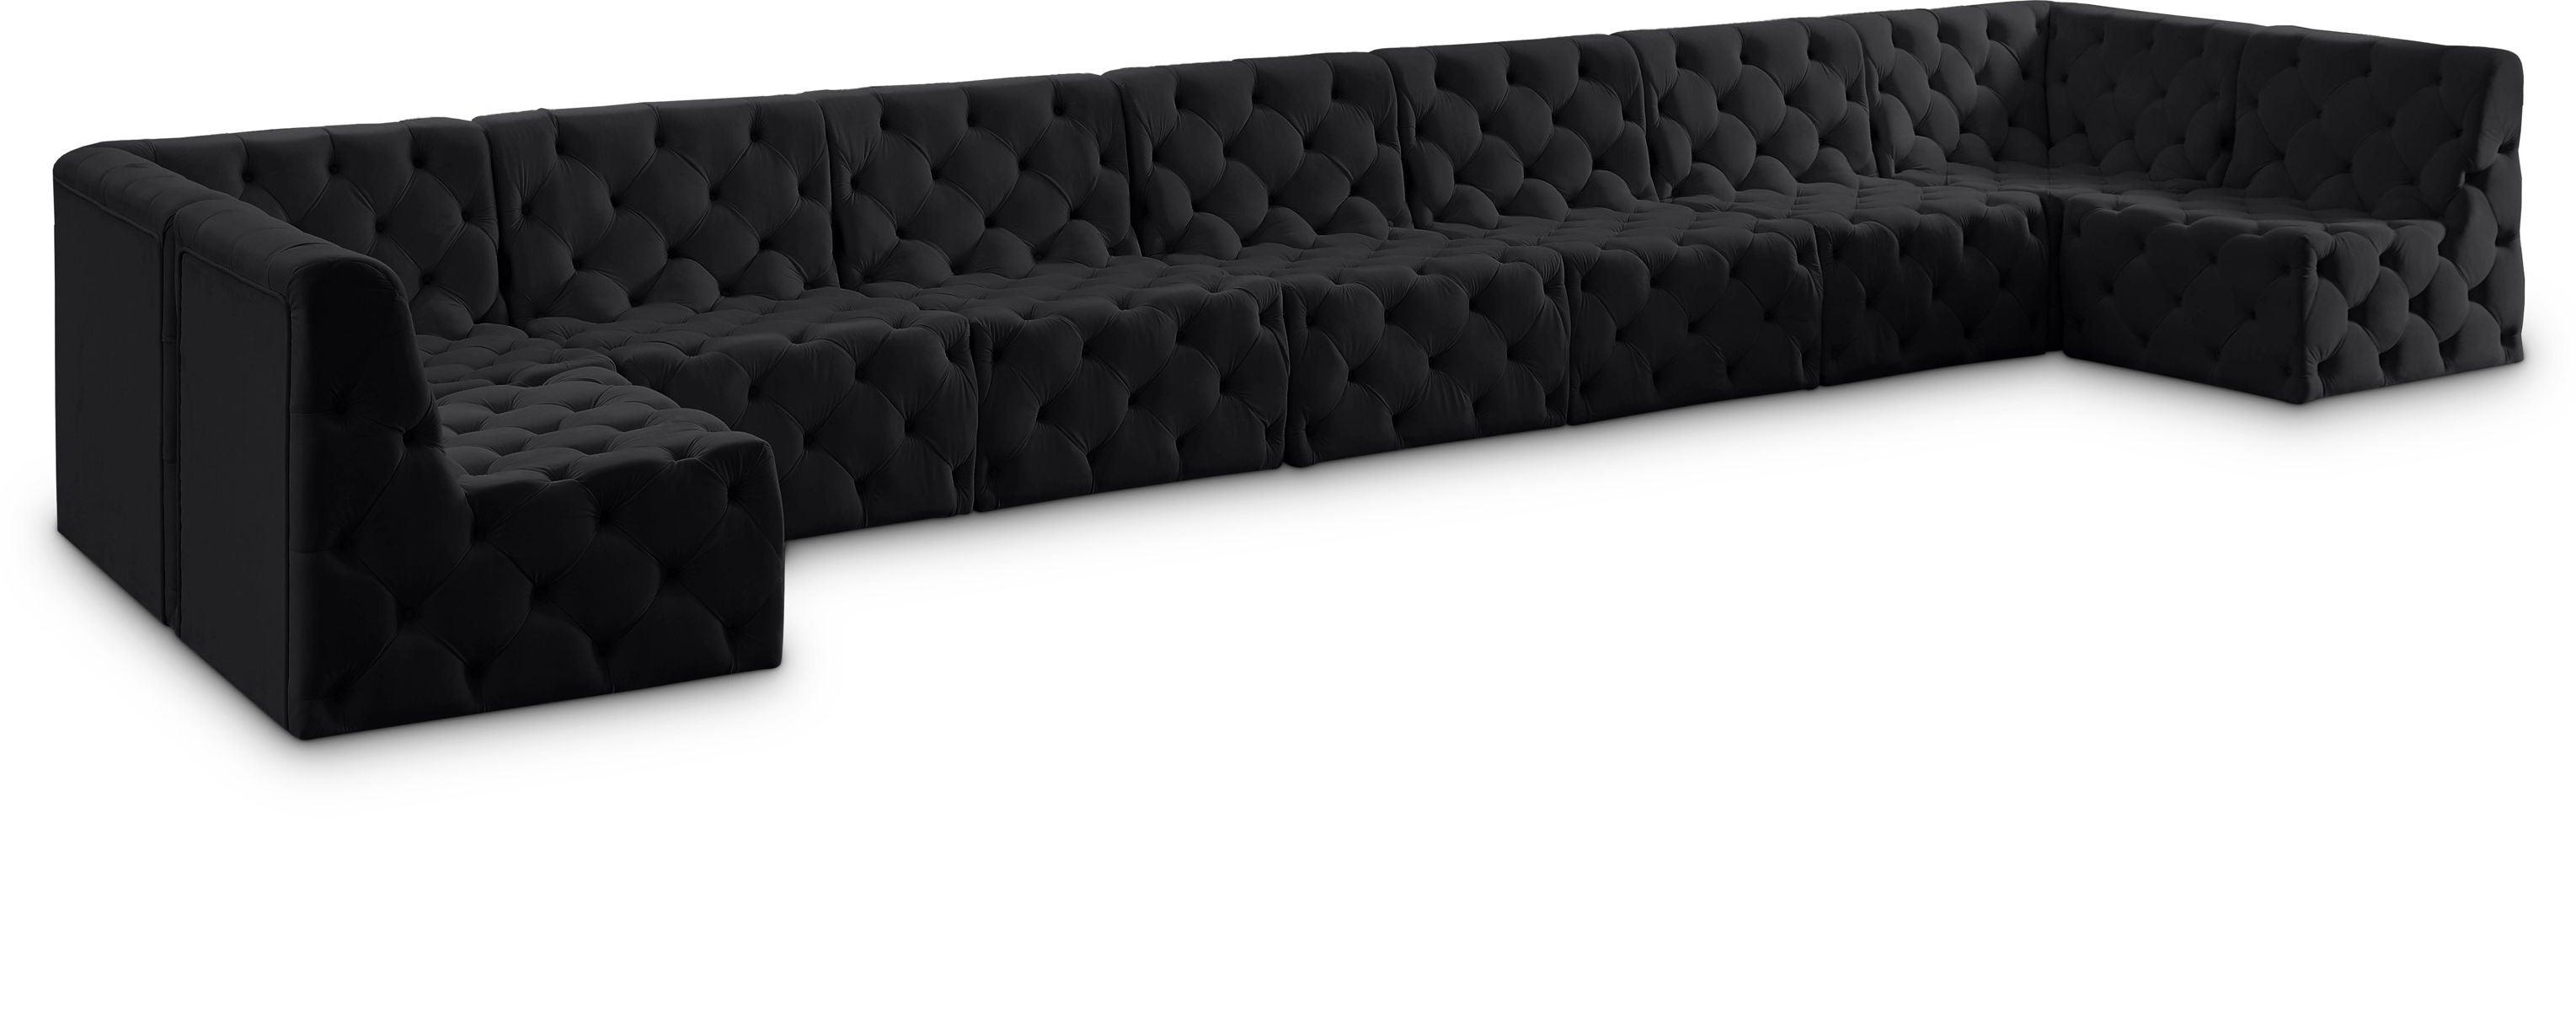 Meridian Furniture - Tuft - Modular Sectional - Black - 5th Avenue Furniture